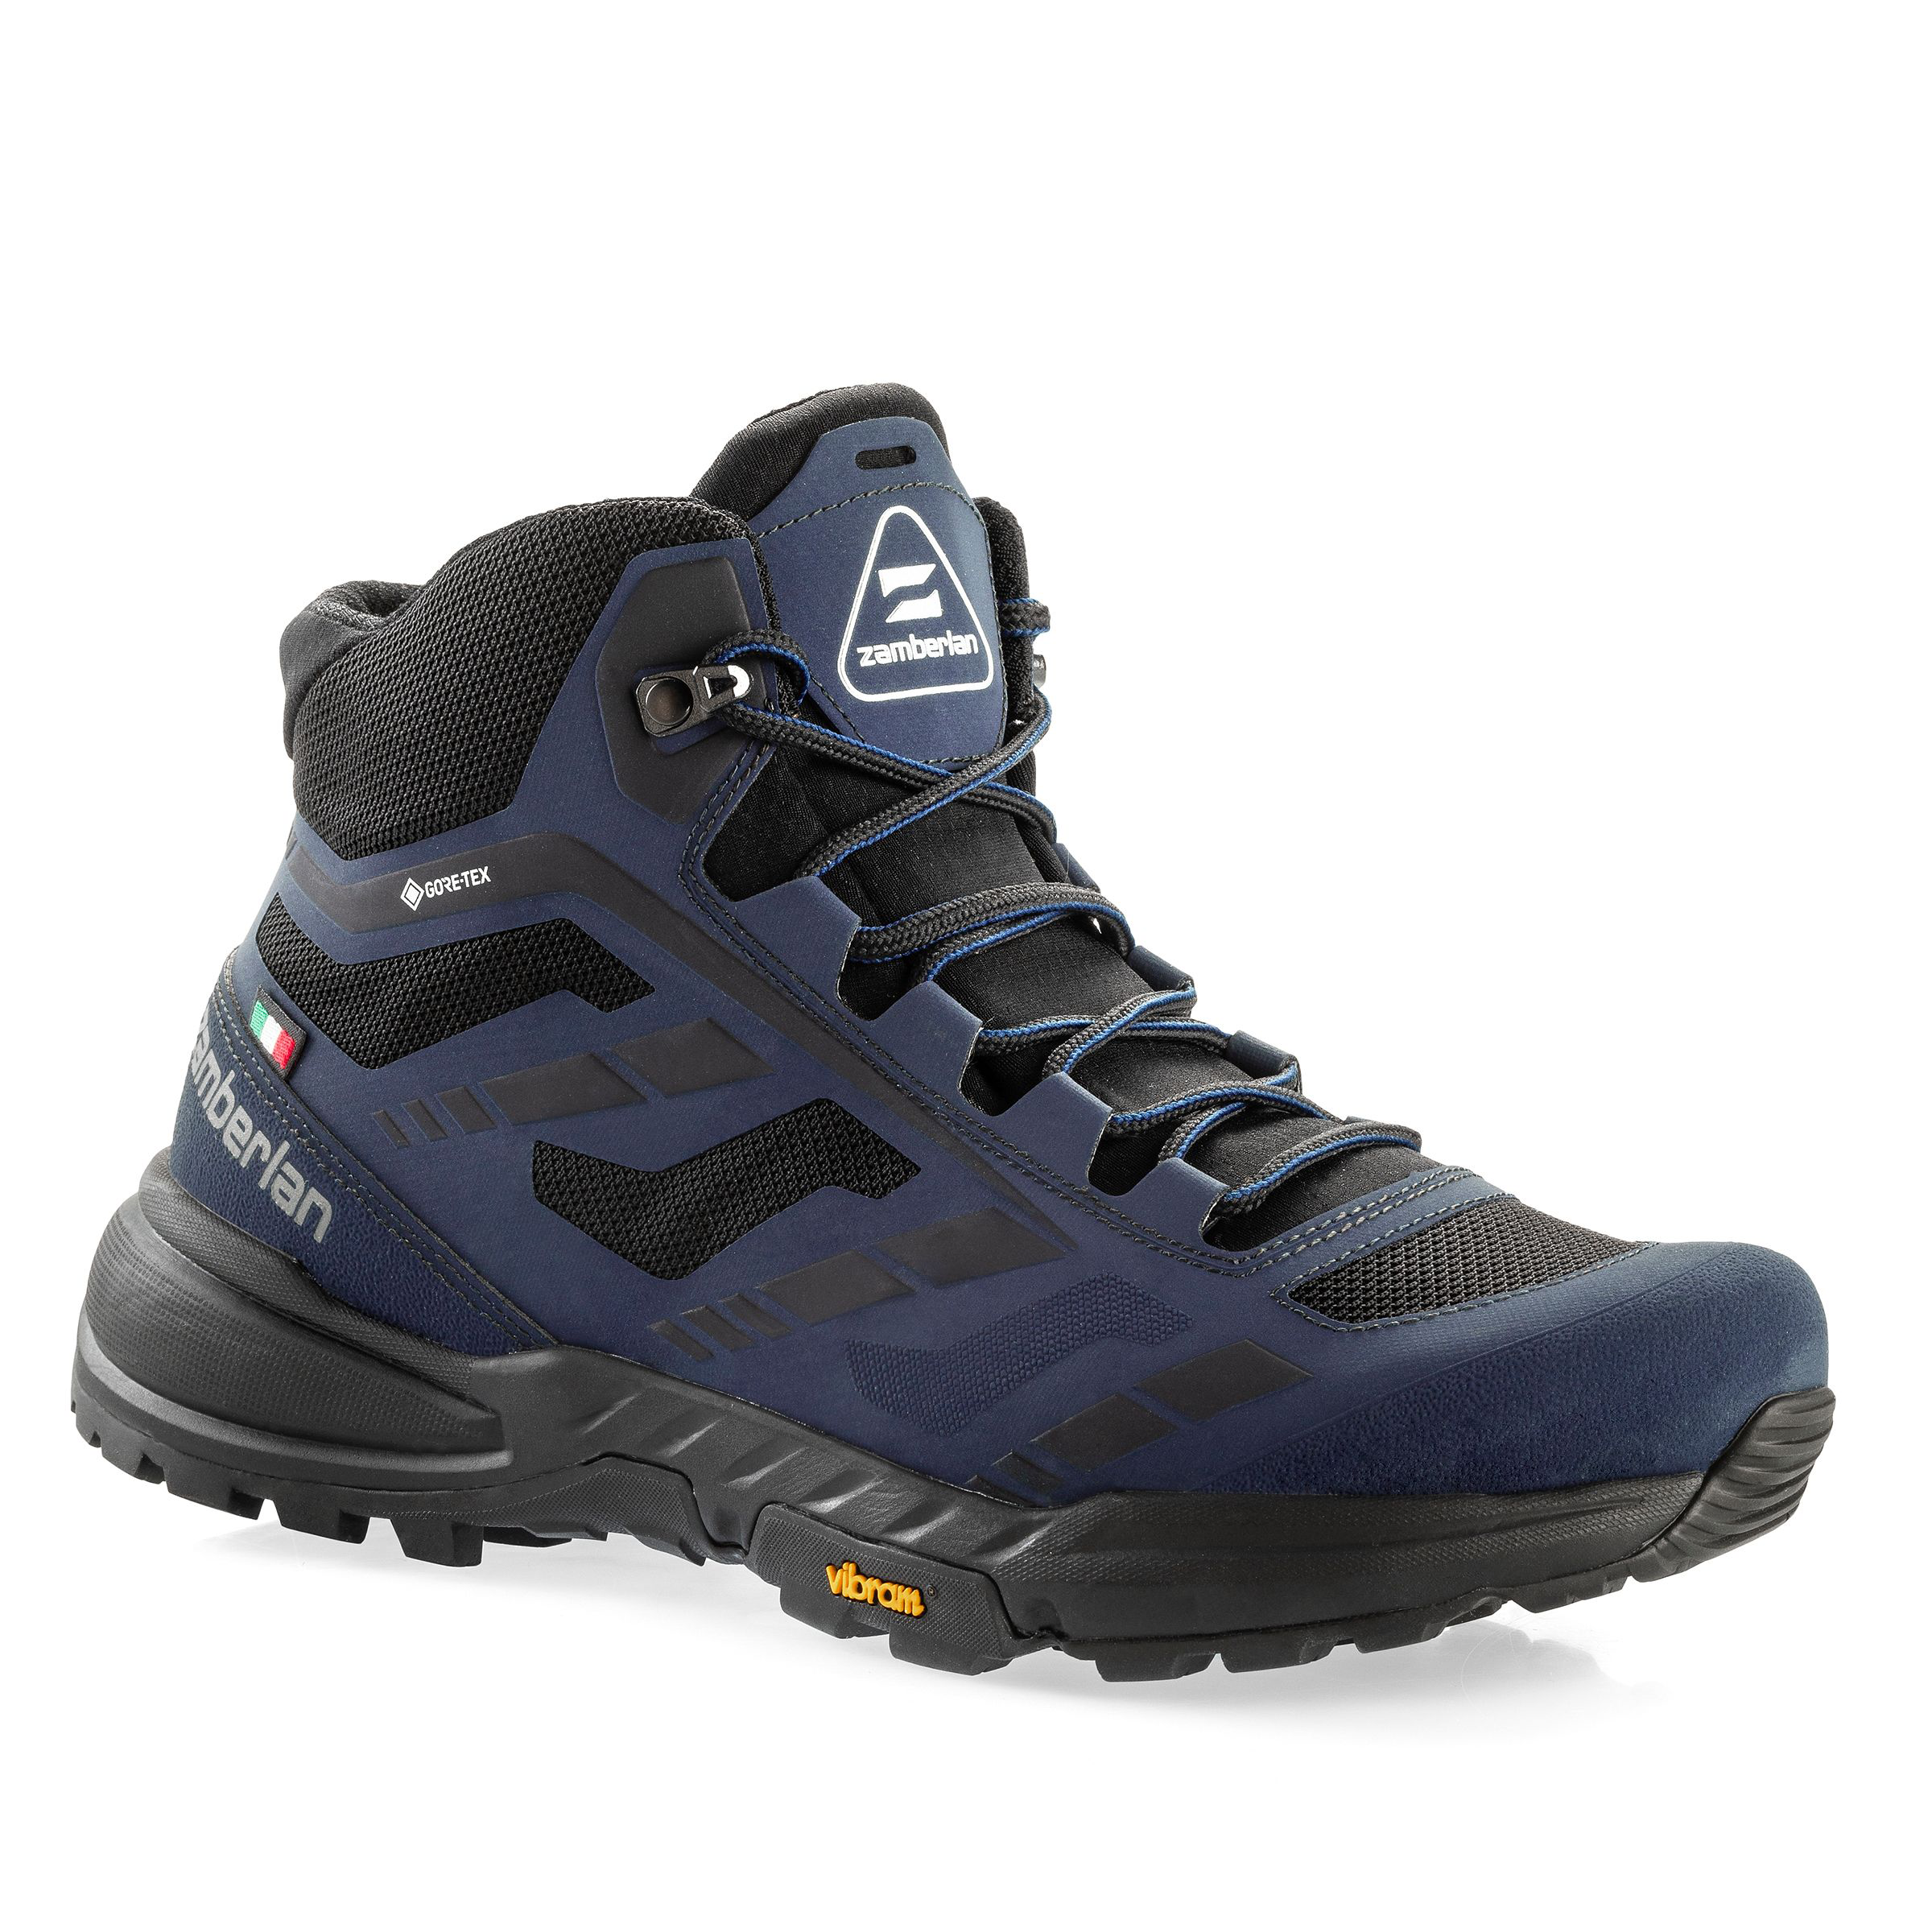 Zamberlan 219 Anabasis GTX Waterproof Mid Hiking Boots for Men - Blue - 7.5M